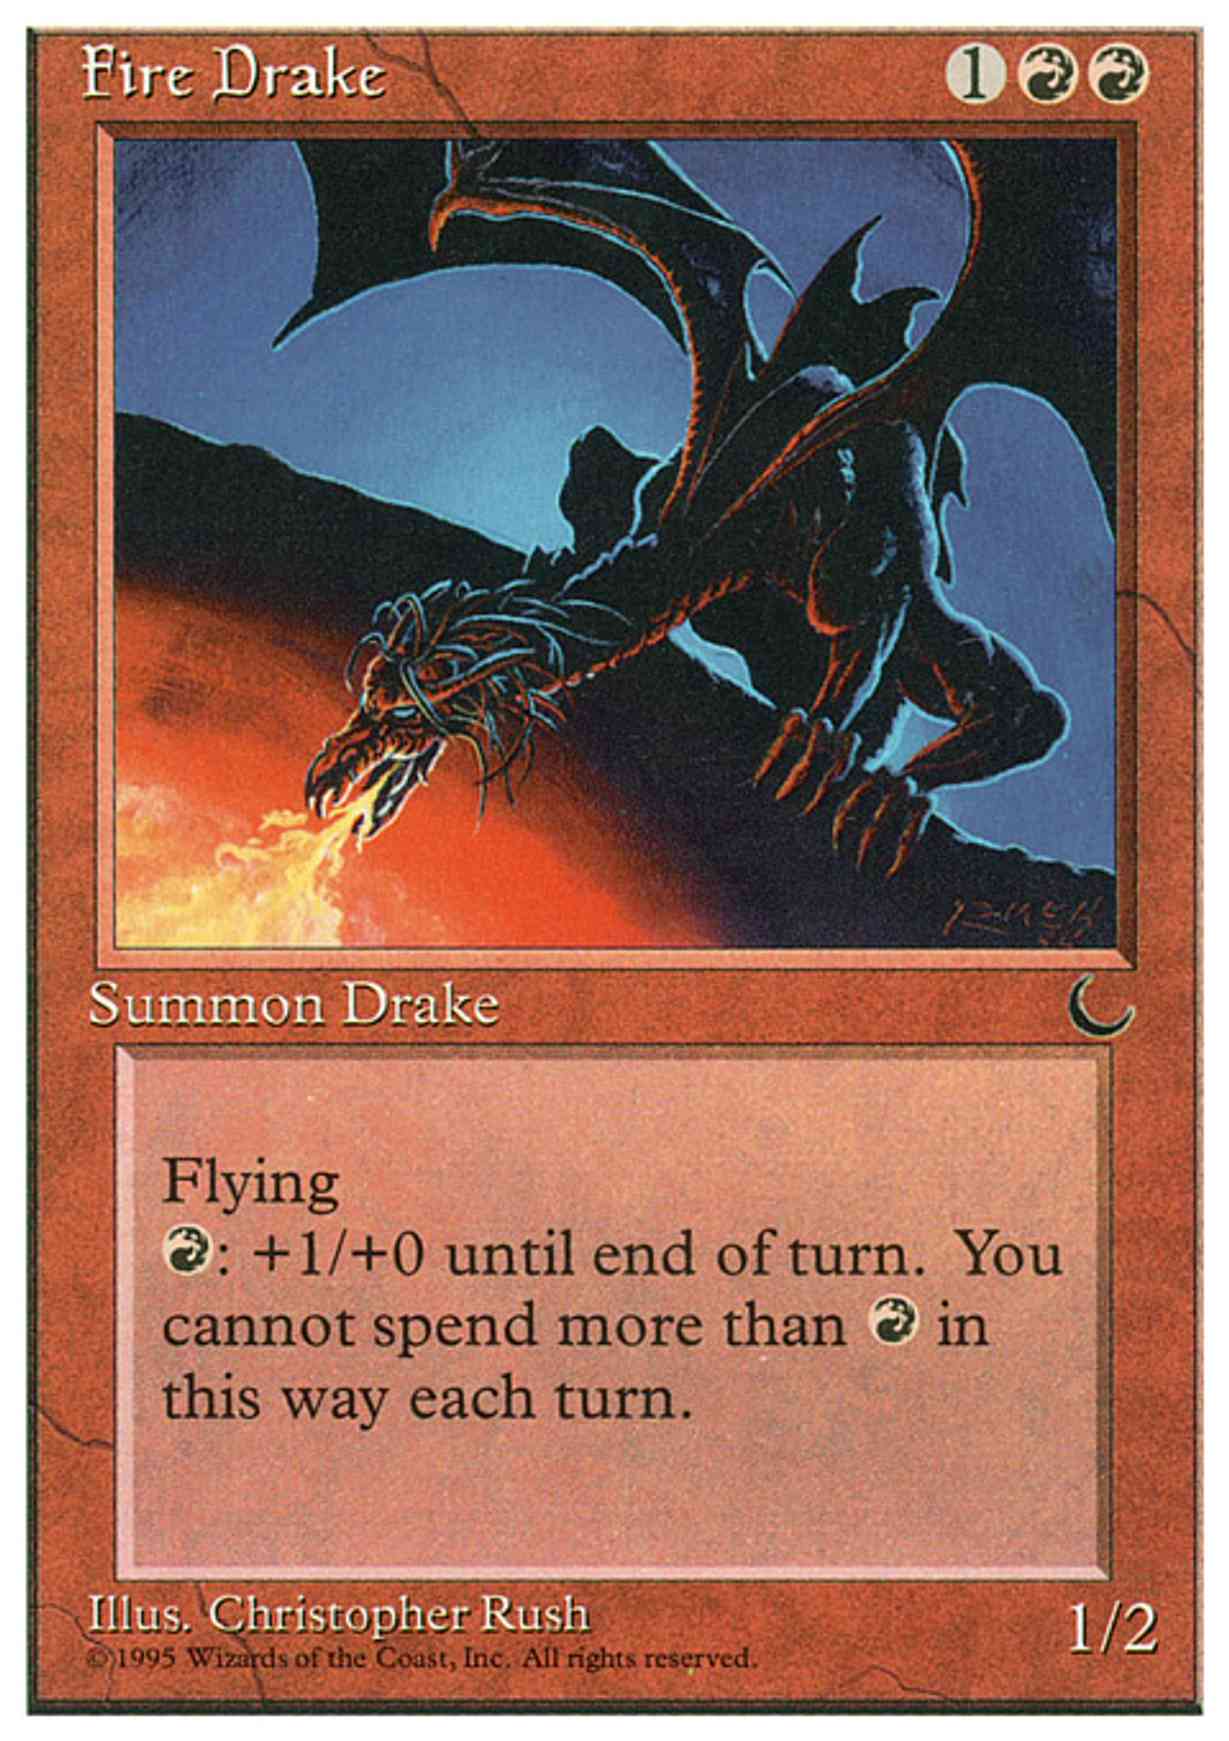 Fire Drake magic card front